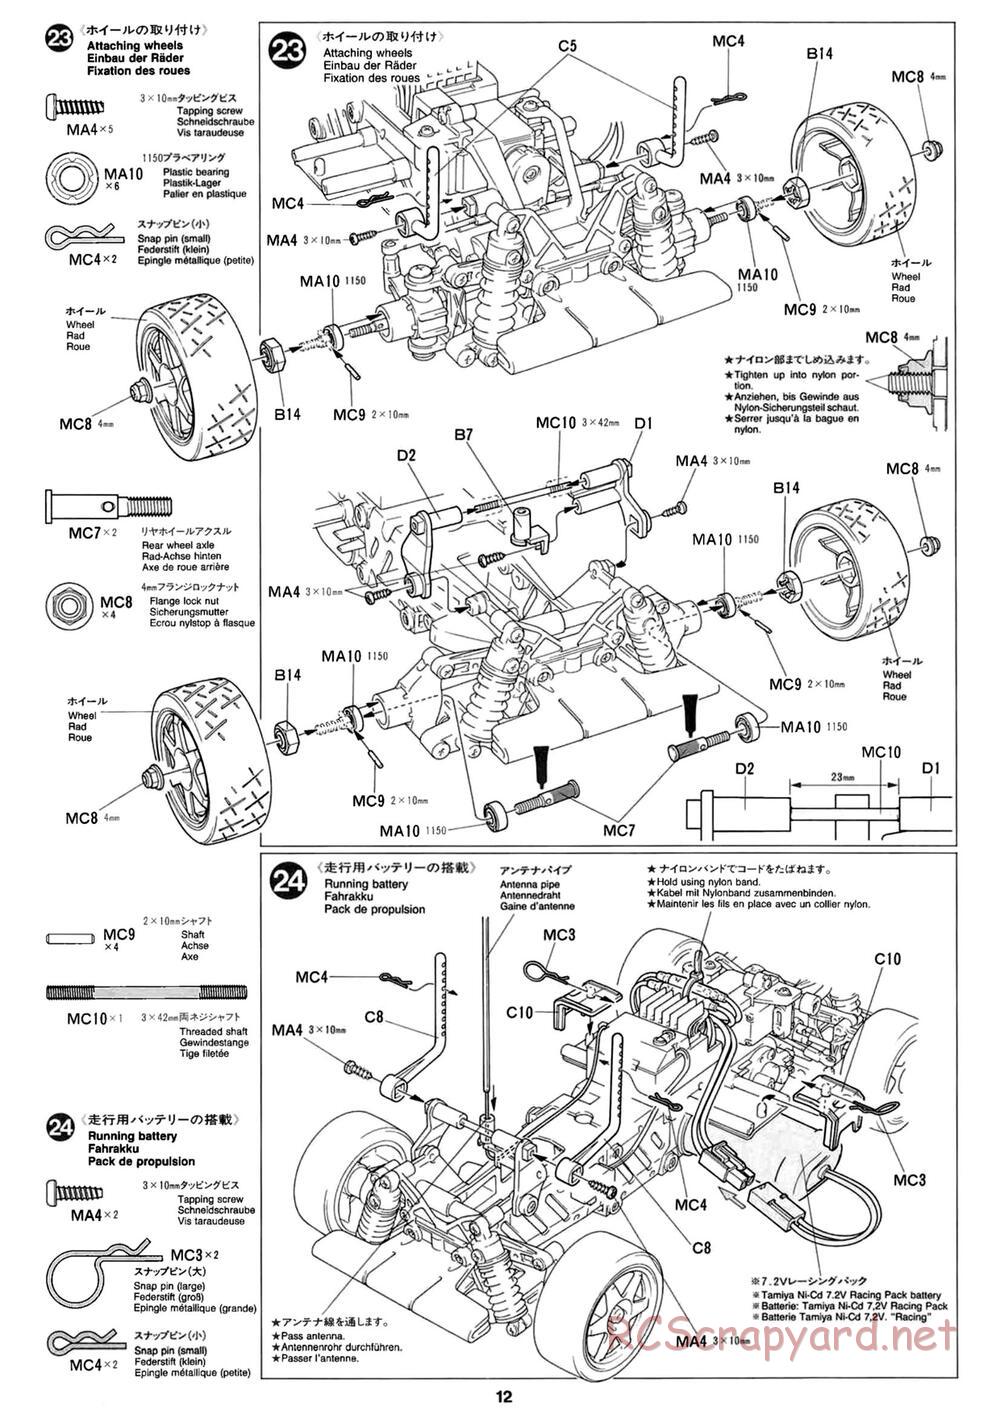 Tamiya - FF-02 Chassis - Manual - Page 12